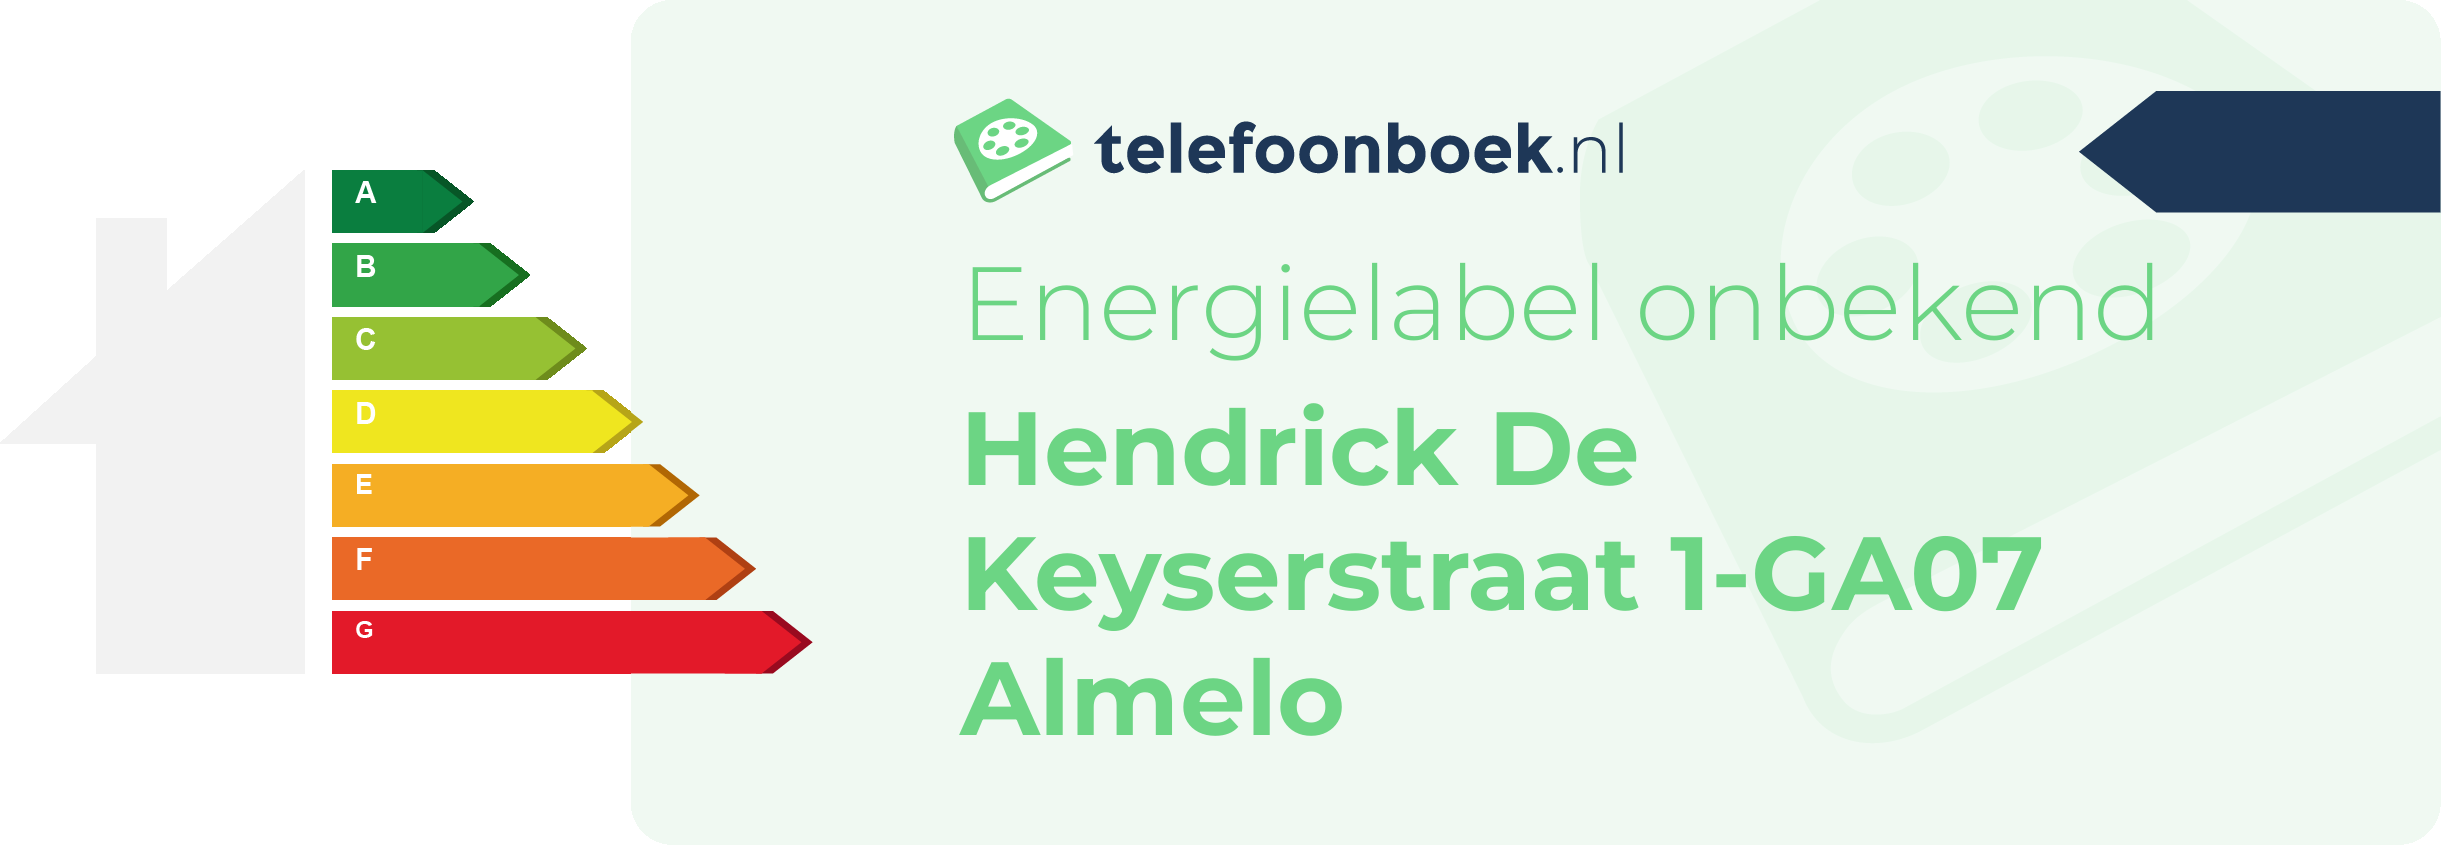 Energielabel Hendrick De Keyserstraat 1-GA07 Almelo